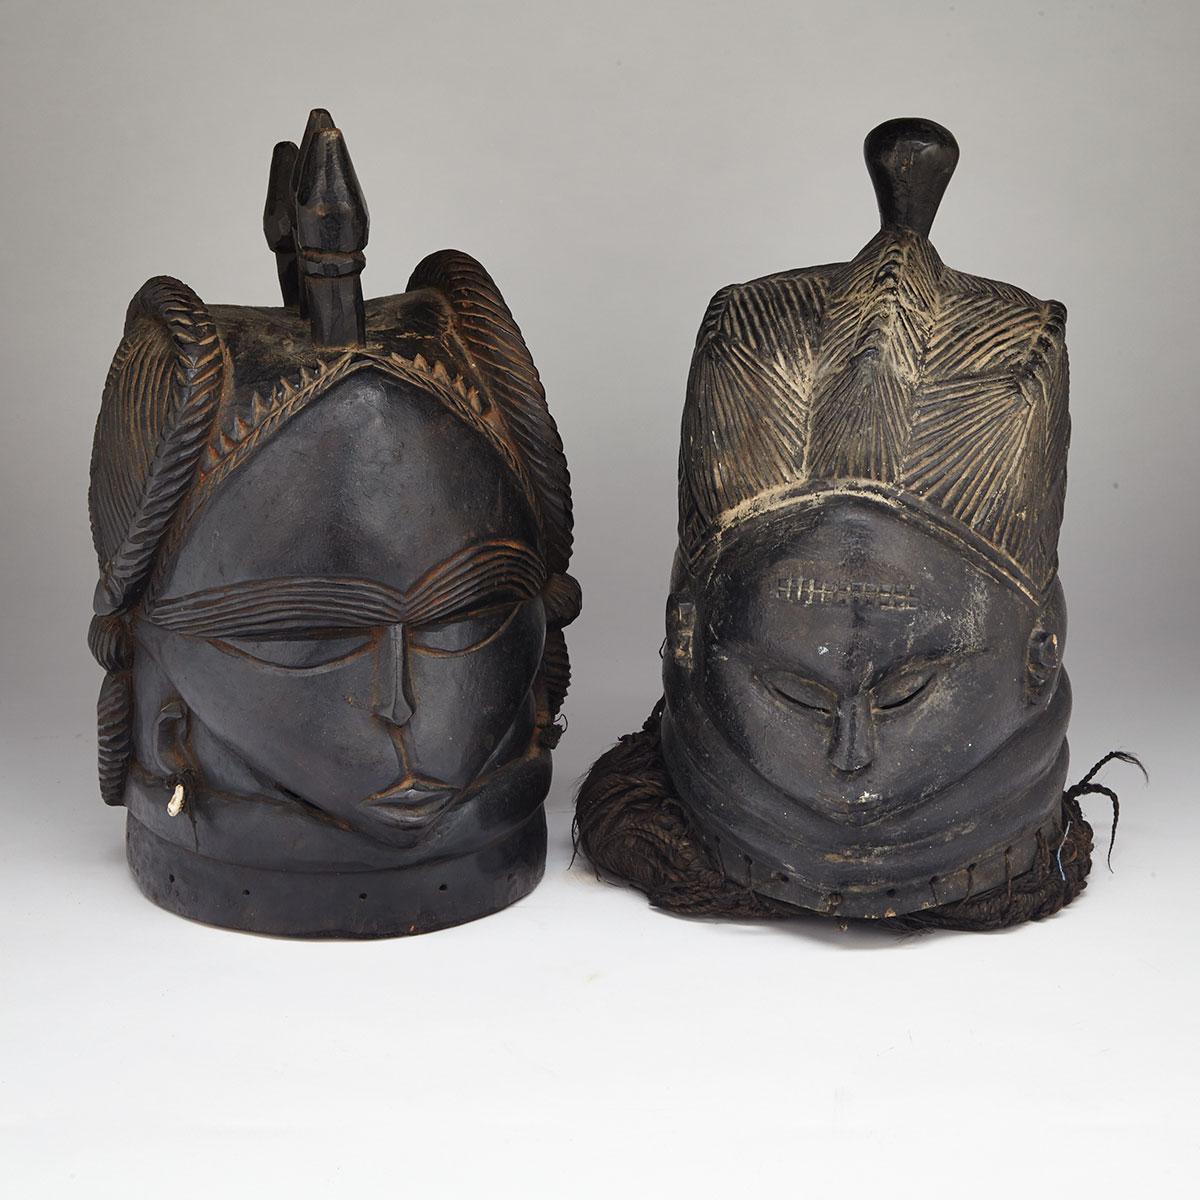 Two African Mendi (Mende) Ritual Masks, 20th century